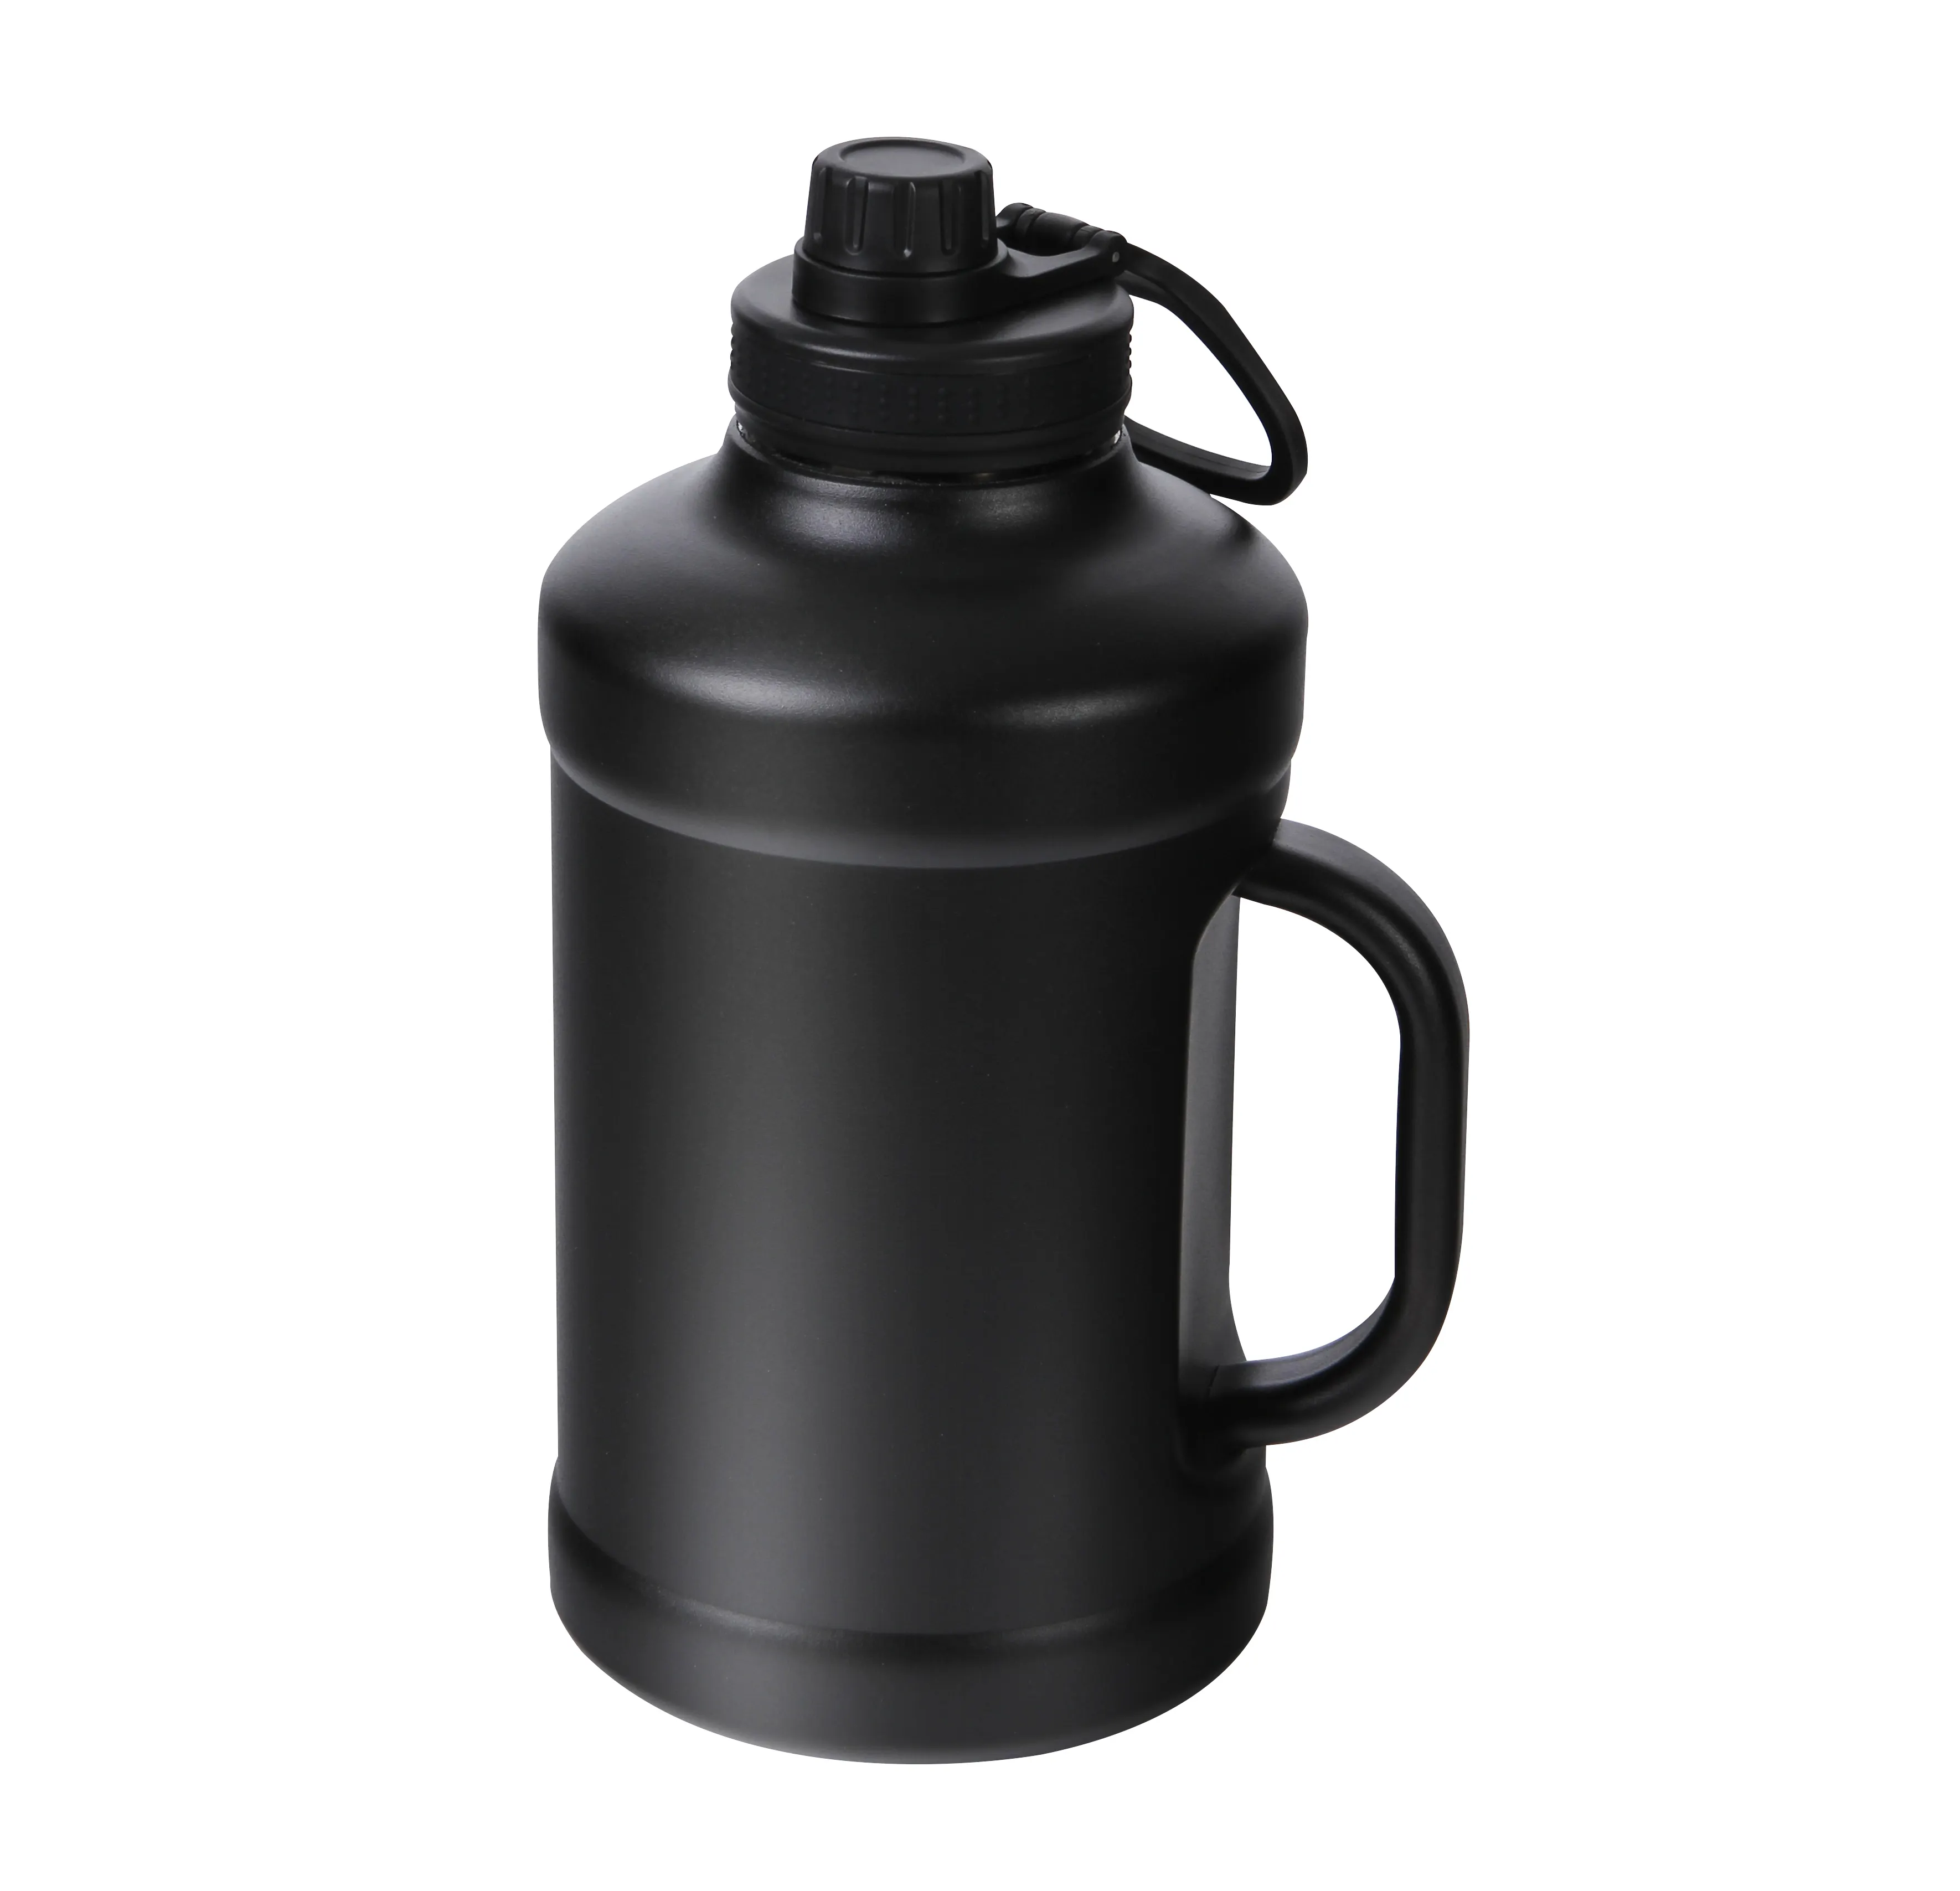 Botol olahraga air besar 2,2 L, botol galon besar olahraga gym dengan logo kustom bebas BPA, 100%, tahan bocor dengan lengan